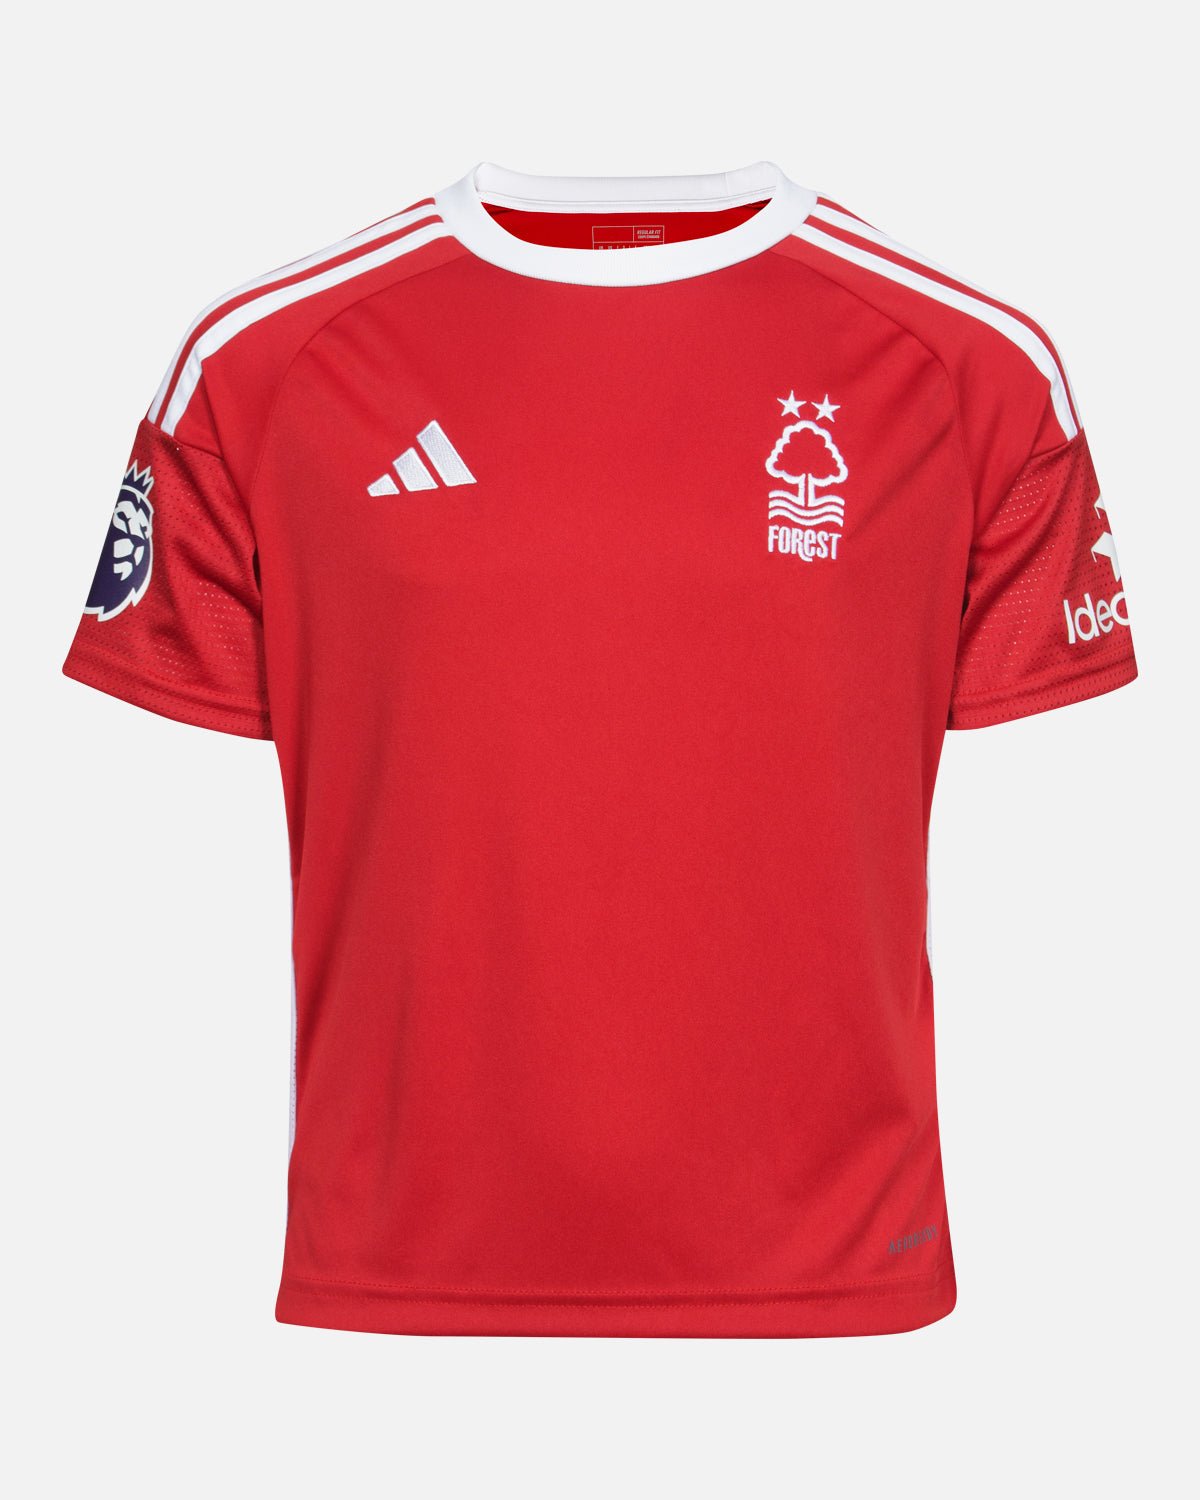 NFFC Junior Home Shirt 23-24 - Awoniyi 9 - Nottingham Forest FC